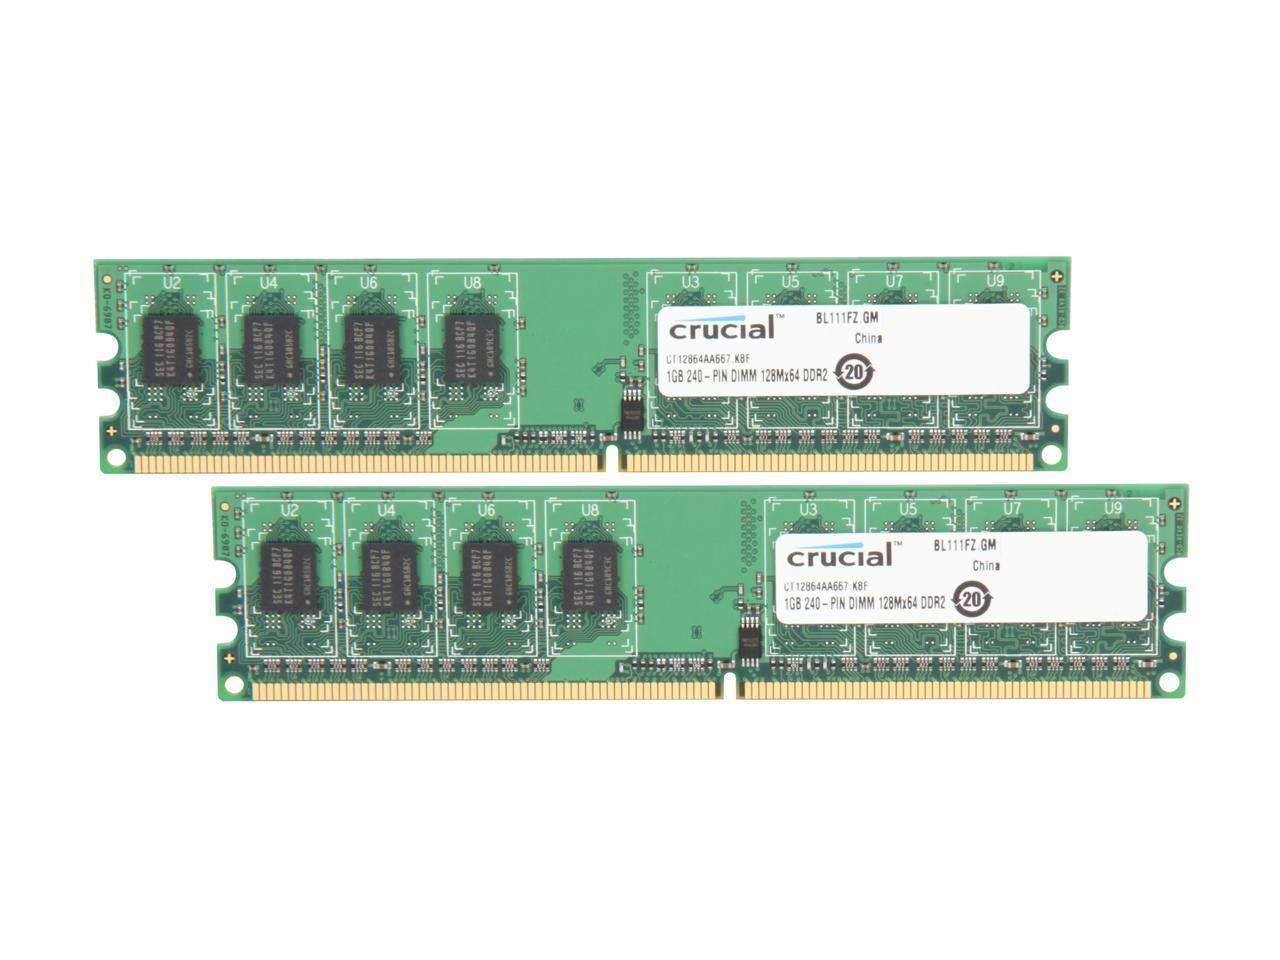 Crucial 2GB (2 x 1GB) 240-Pin DDR2 SDRAM DDR2 667 (PC2 5300) Dual Channel Kit Desktop Memory Model CT2KIT12864AA667